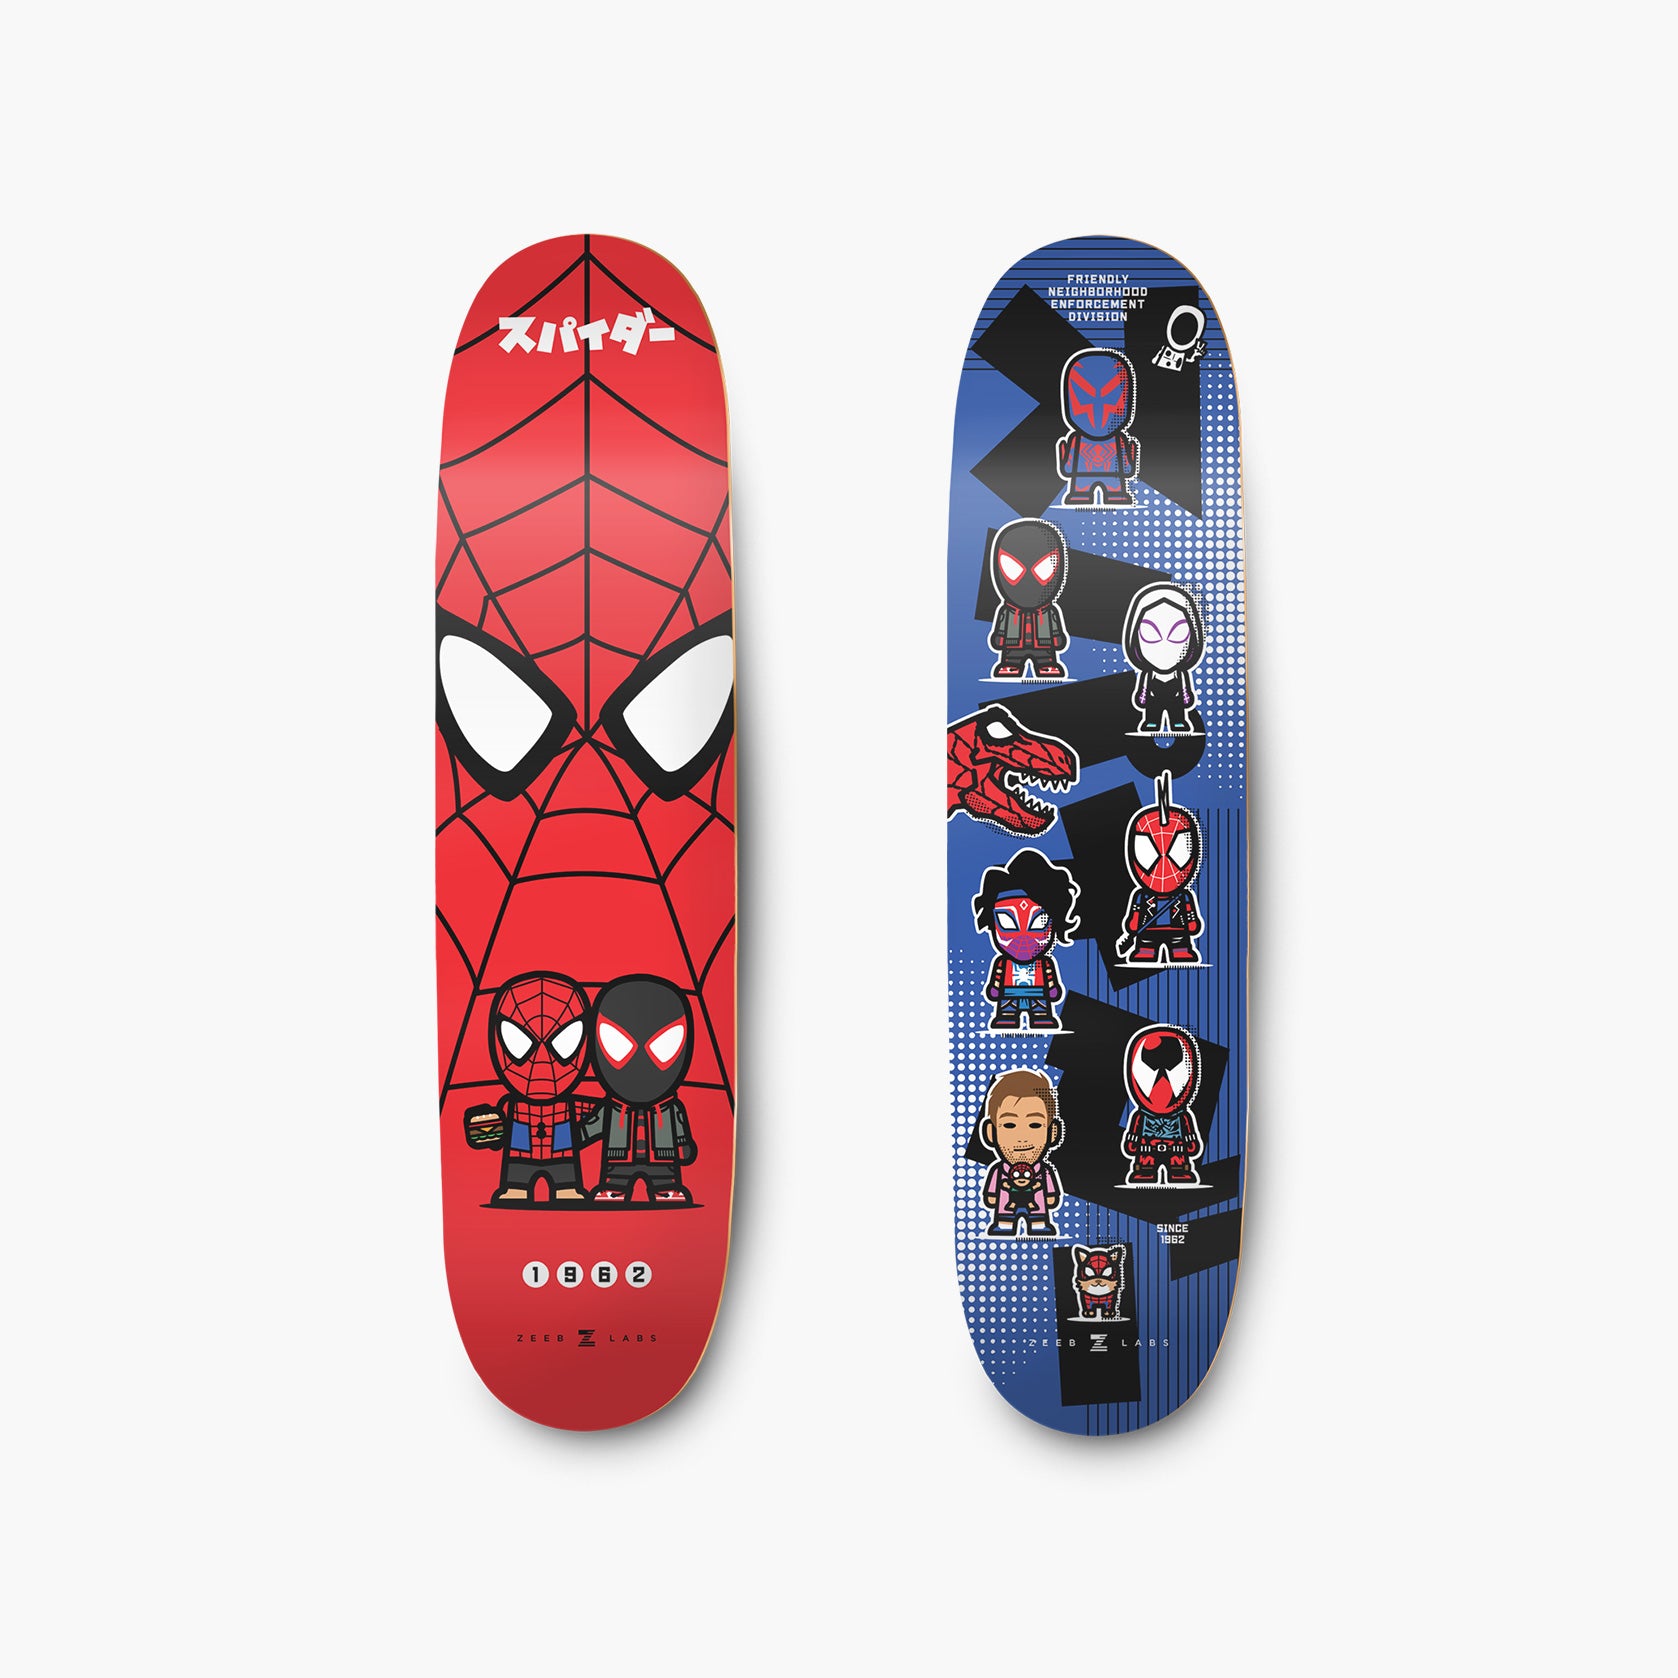 Spider—Skate Deck—Red